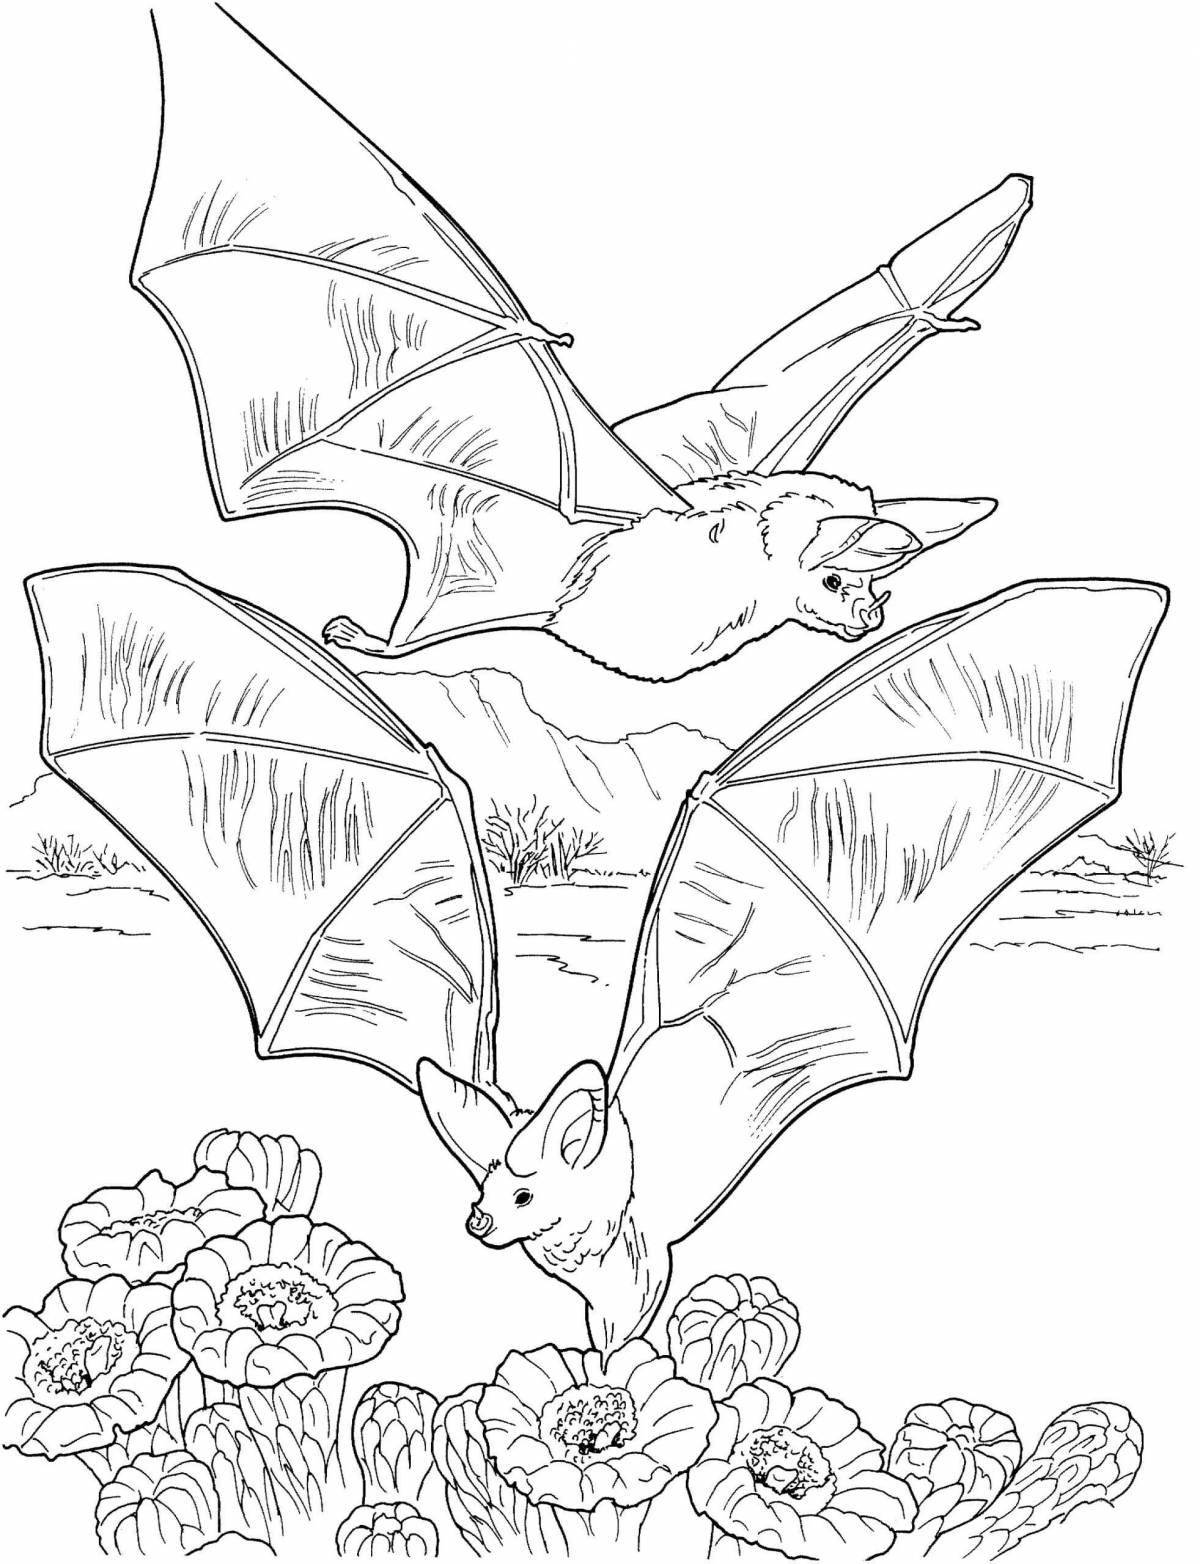 Bat for kids #1